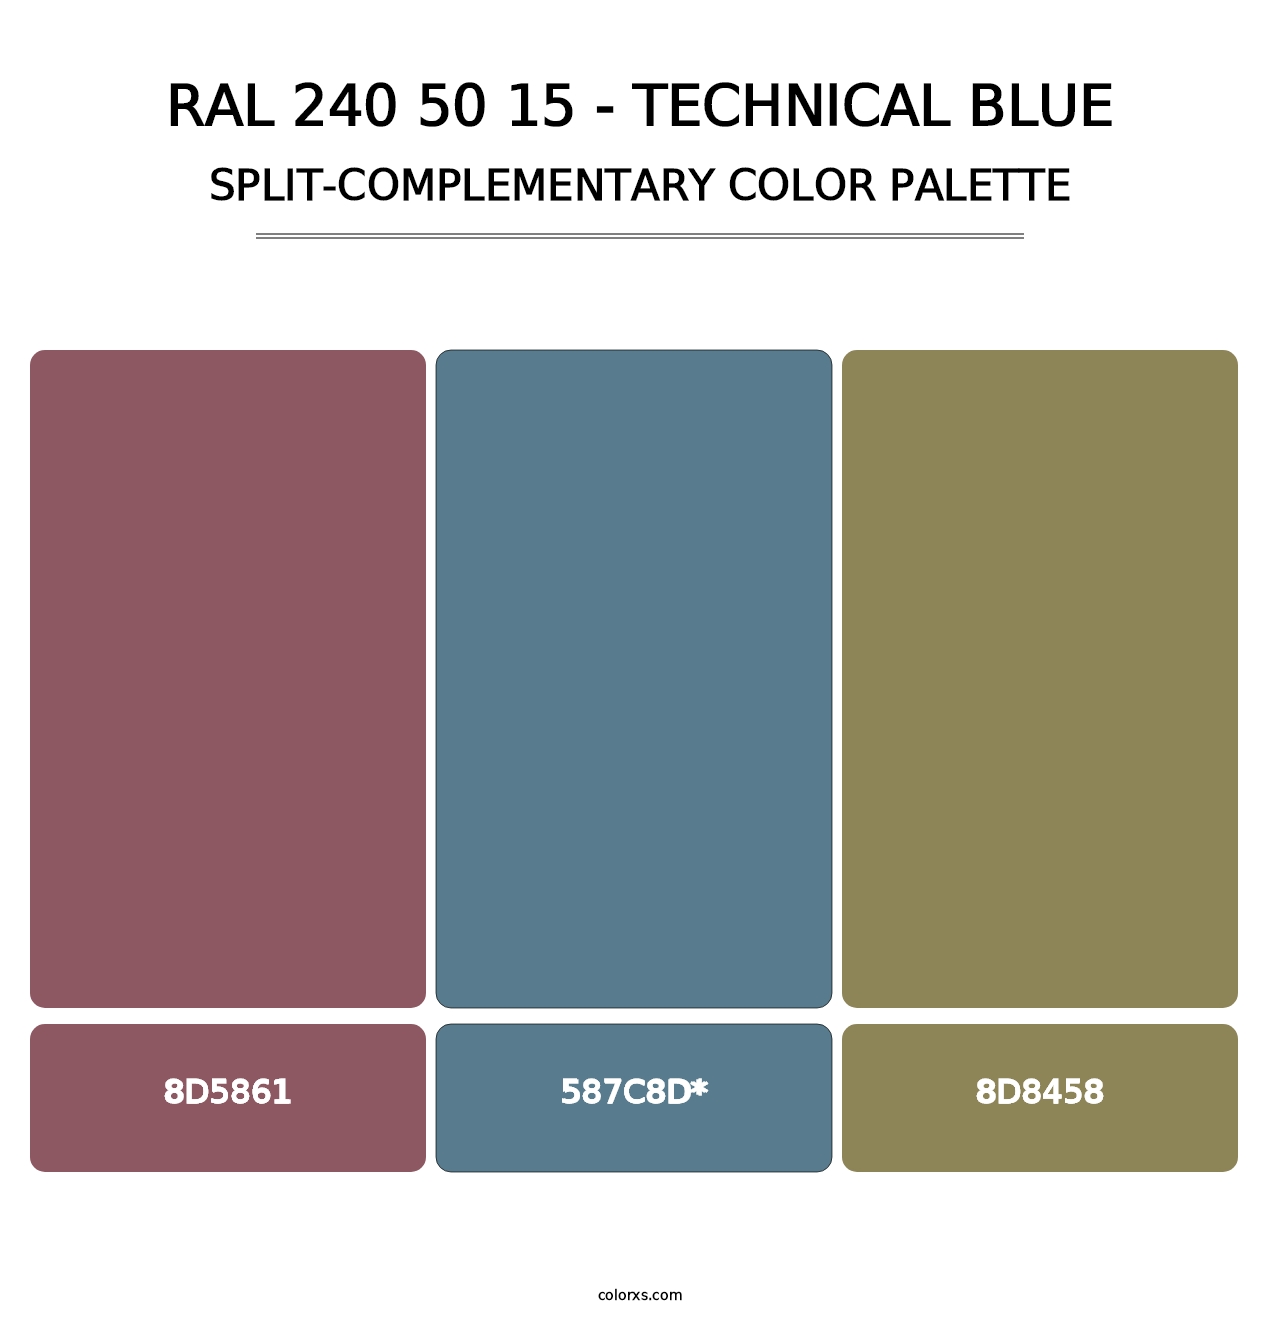 RAL 240 50 15 - Technical Blue - Split-Complementary Color Palette